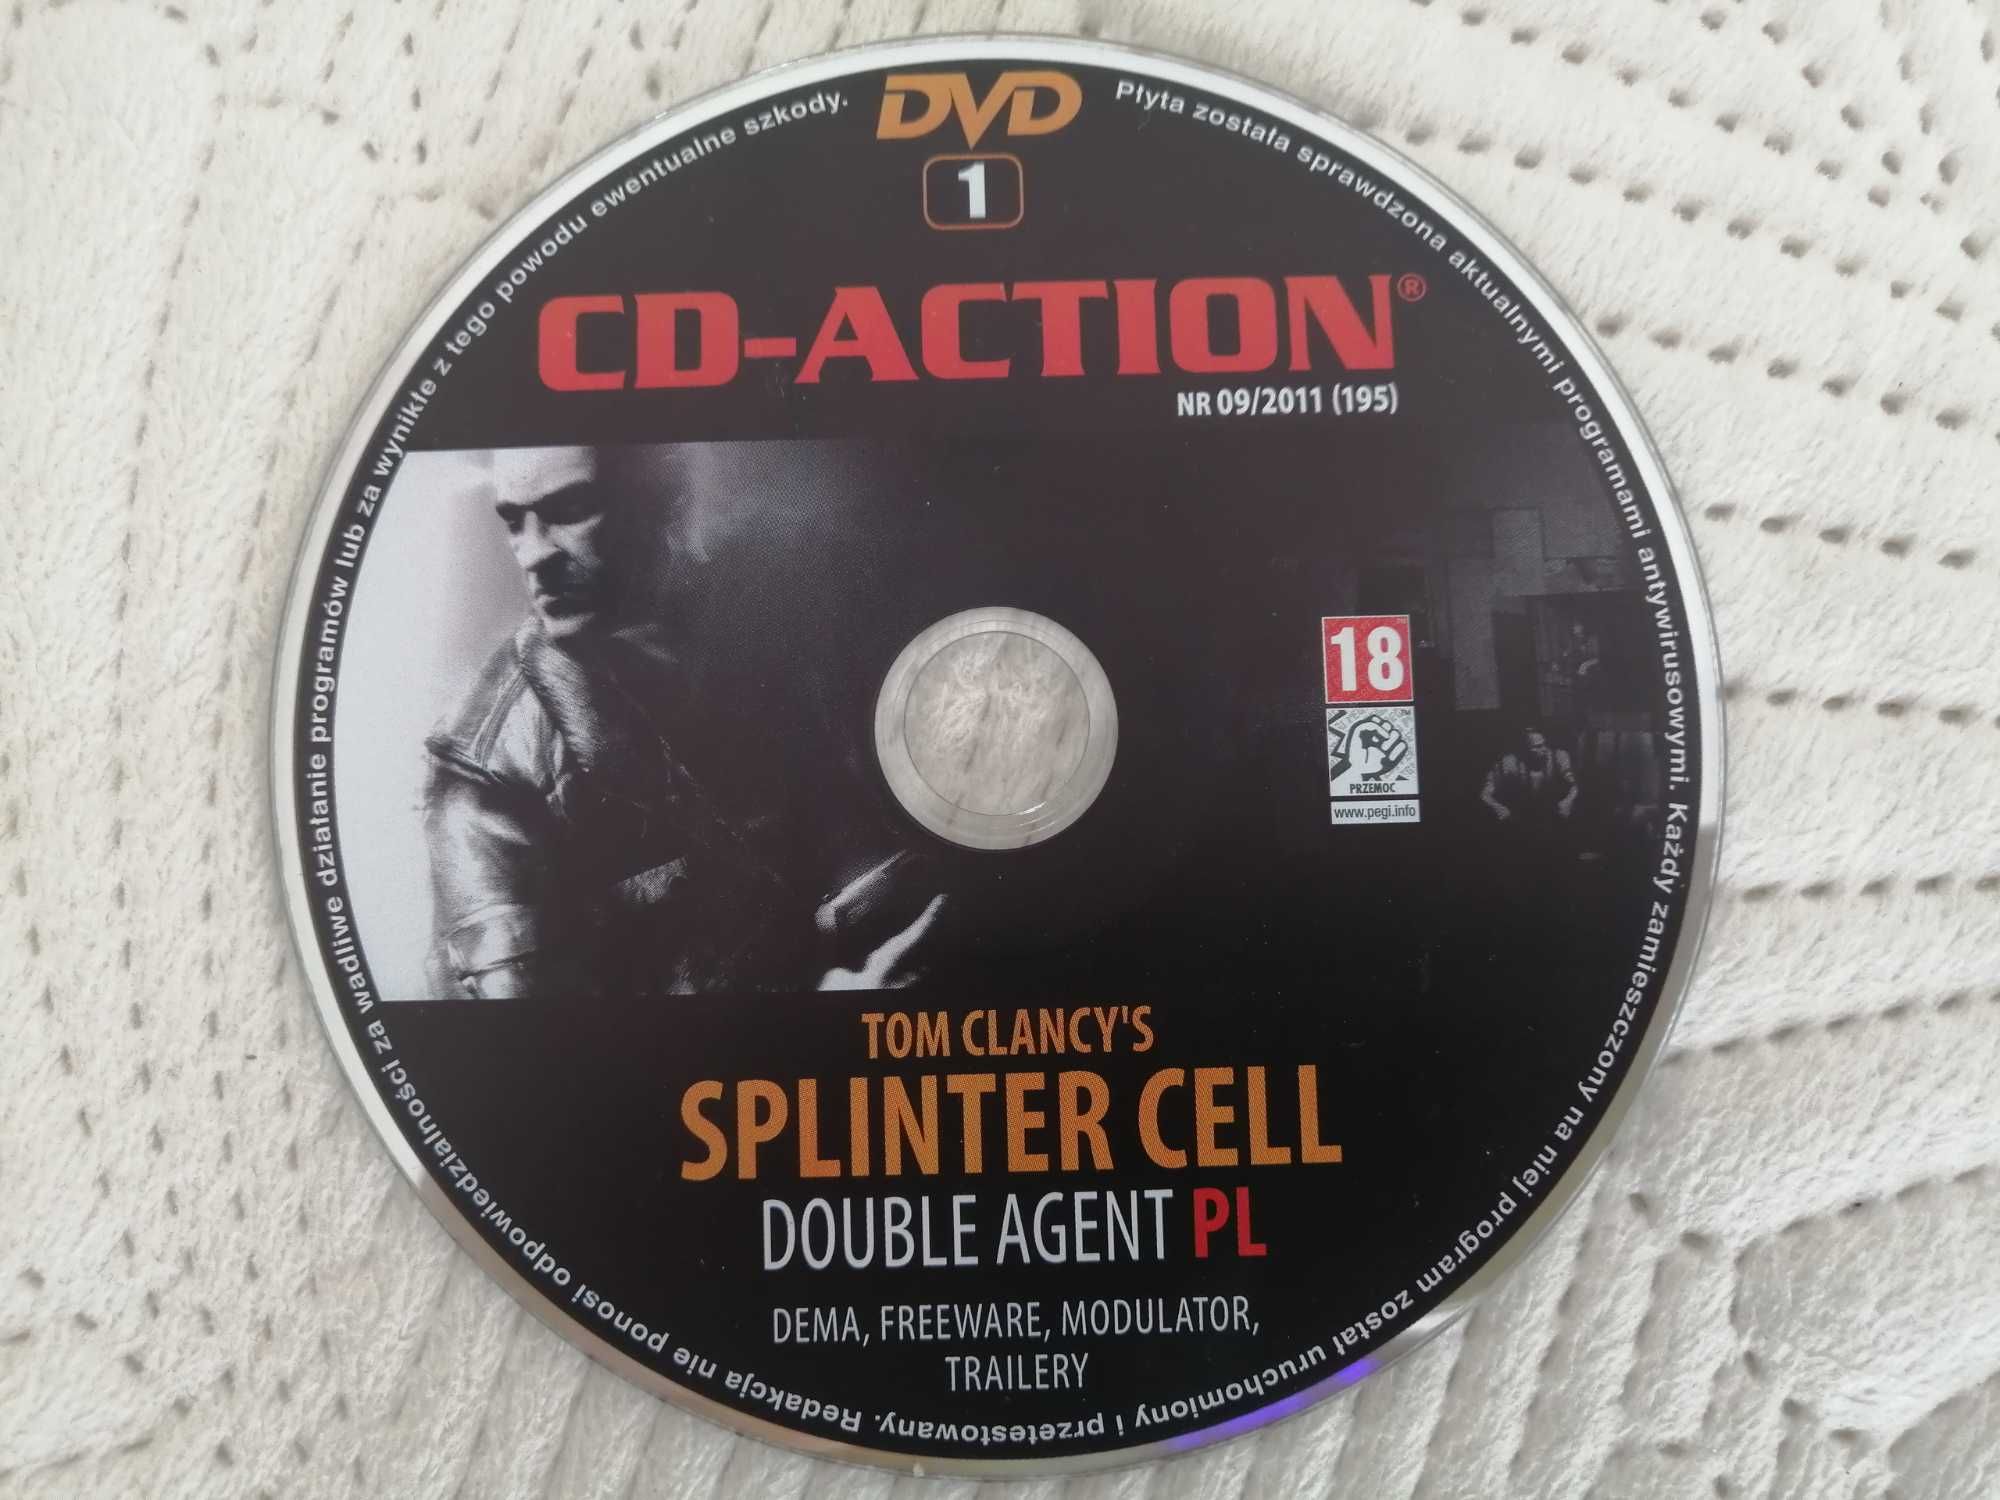 Tom Clancy's Splinter Cell: Double Agent PC